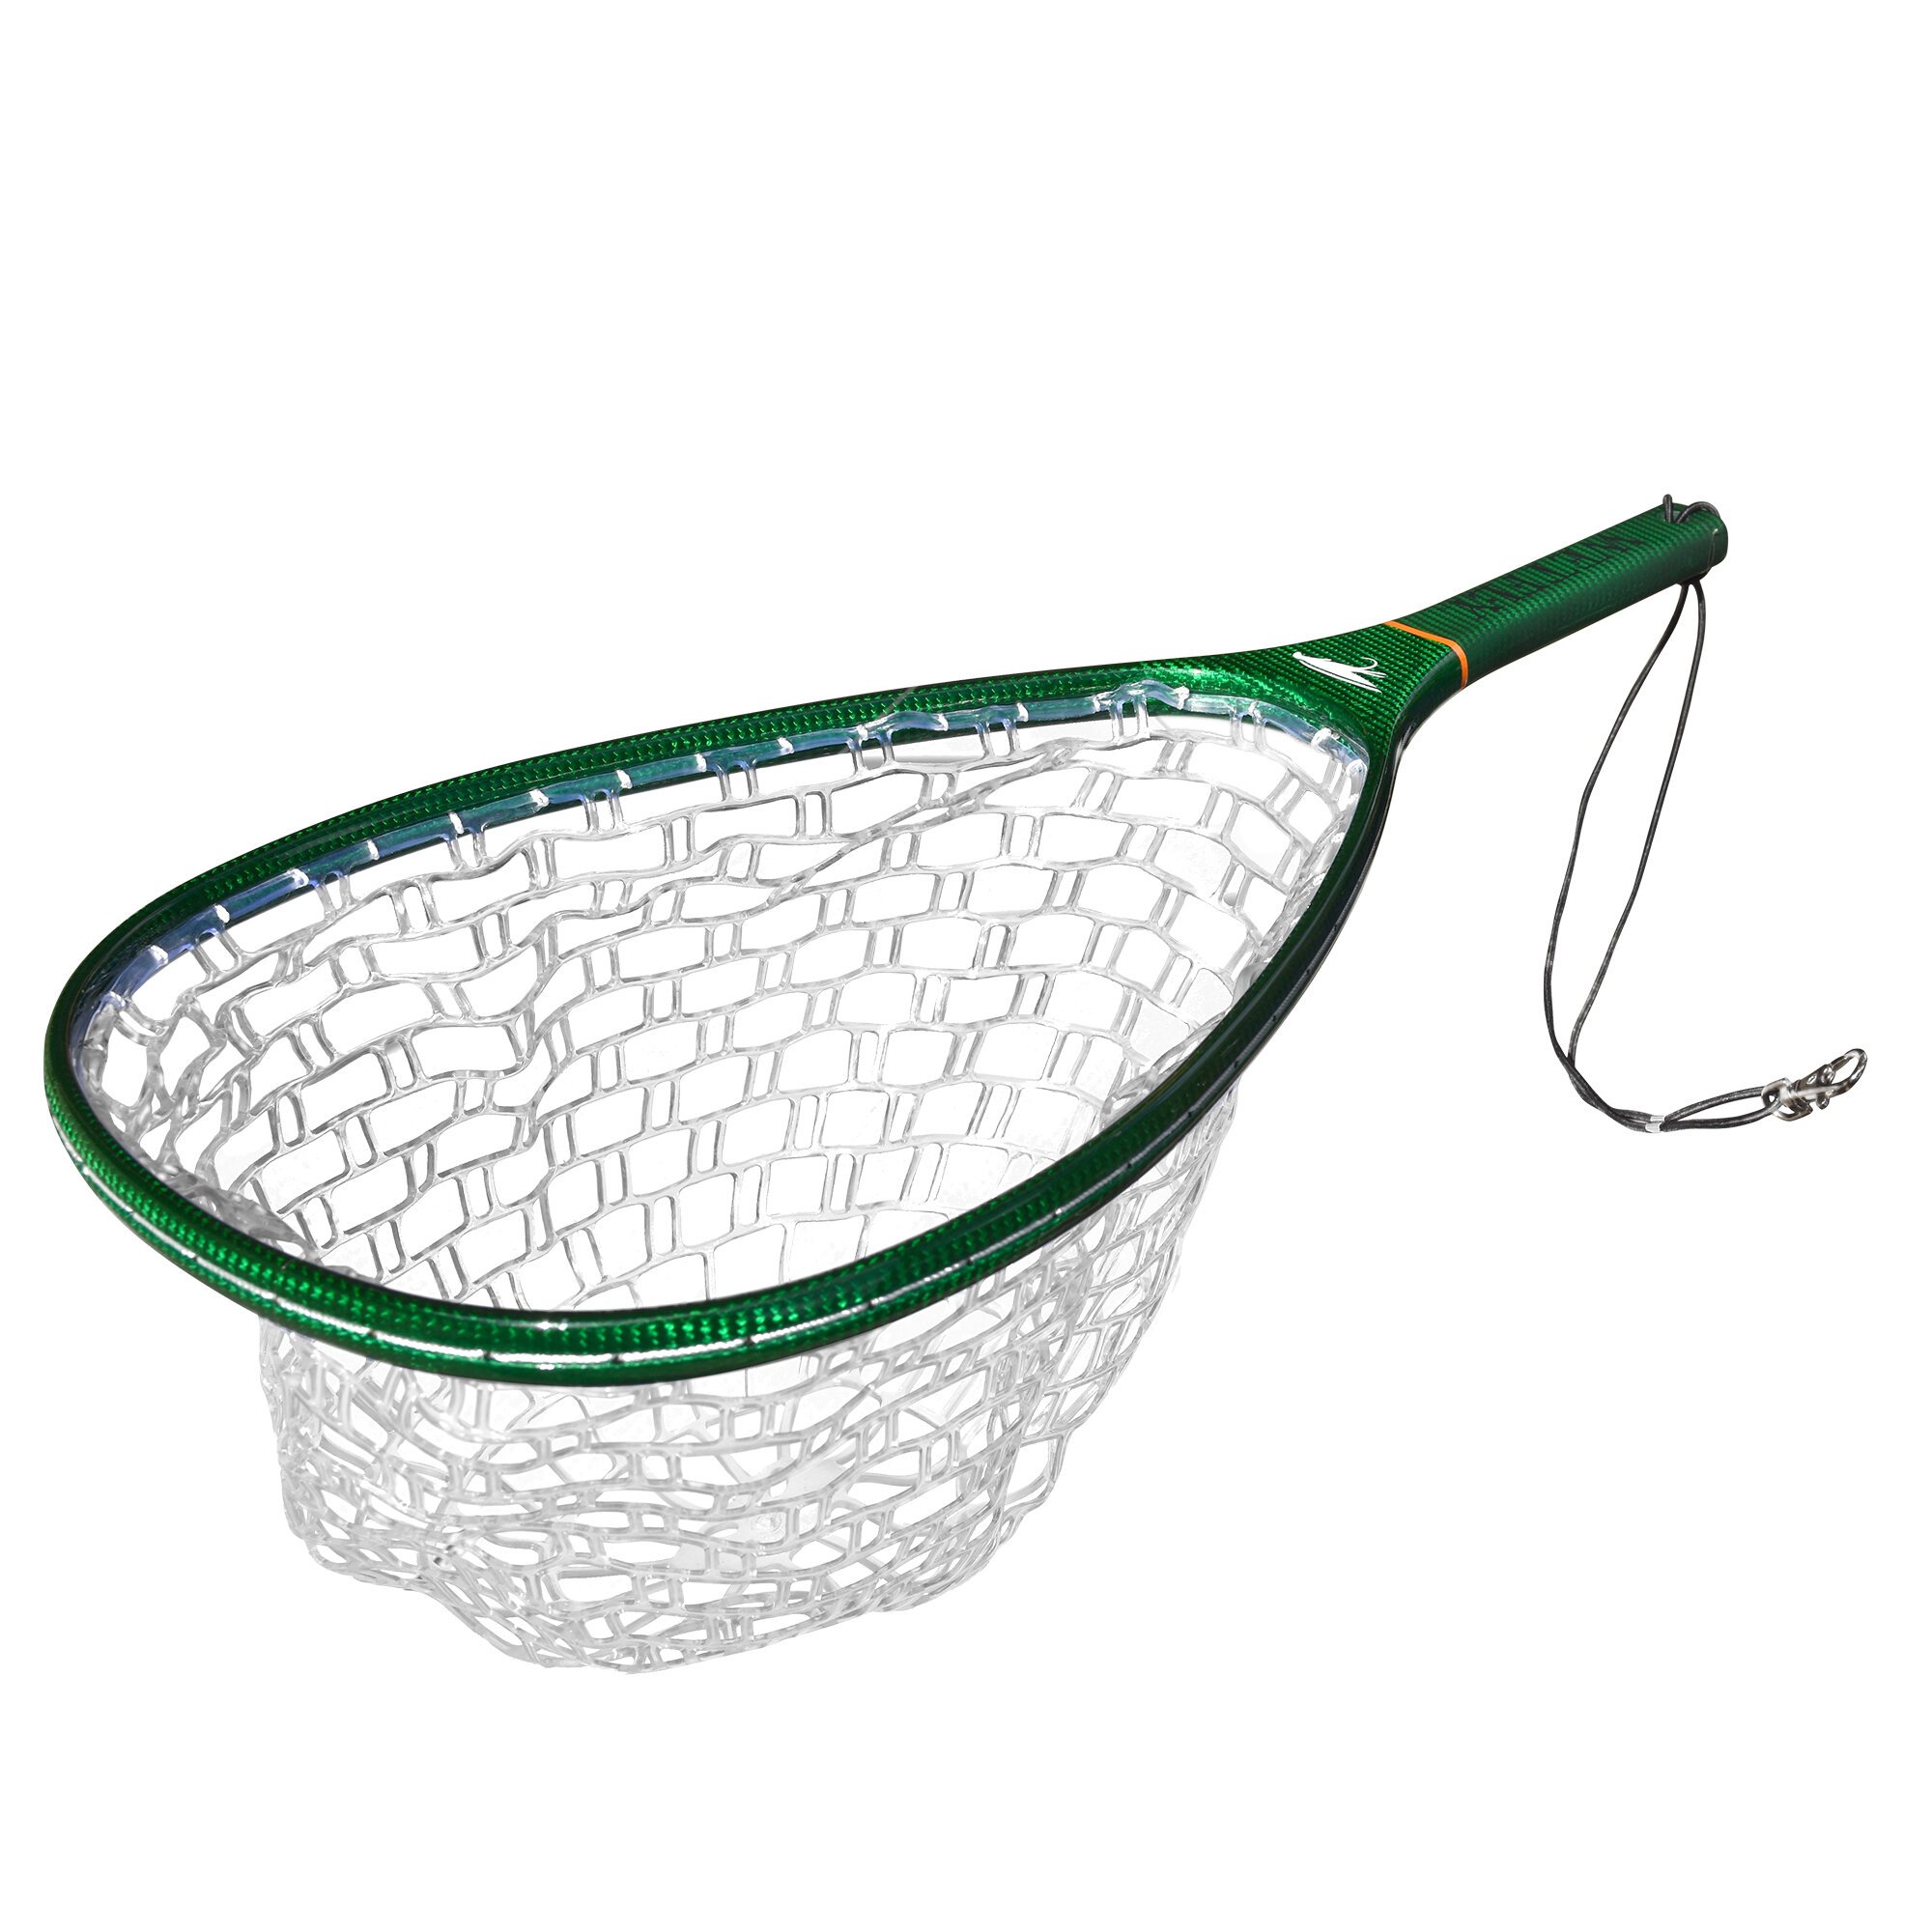 Wetfly Titanium XD Carbon Fiber Fishing Net - Save 46%